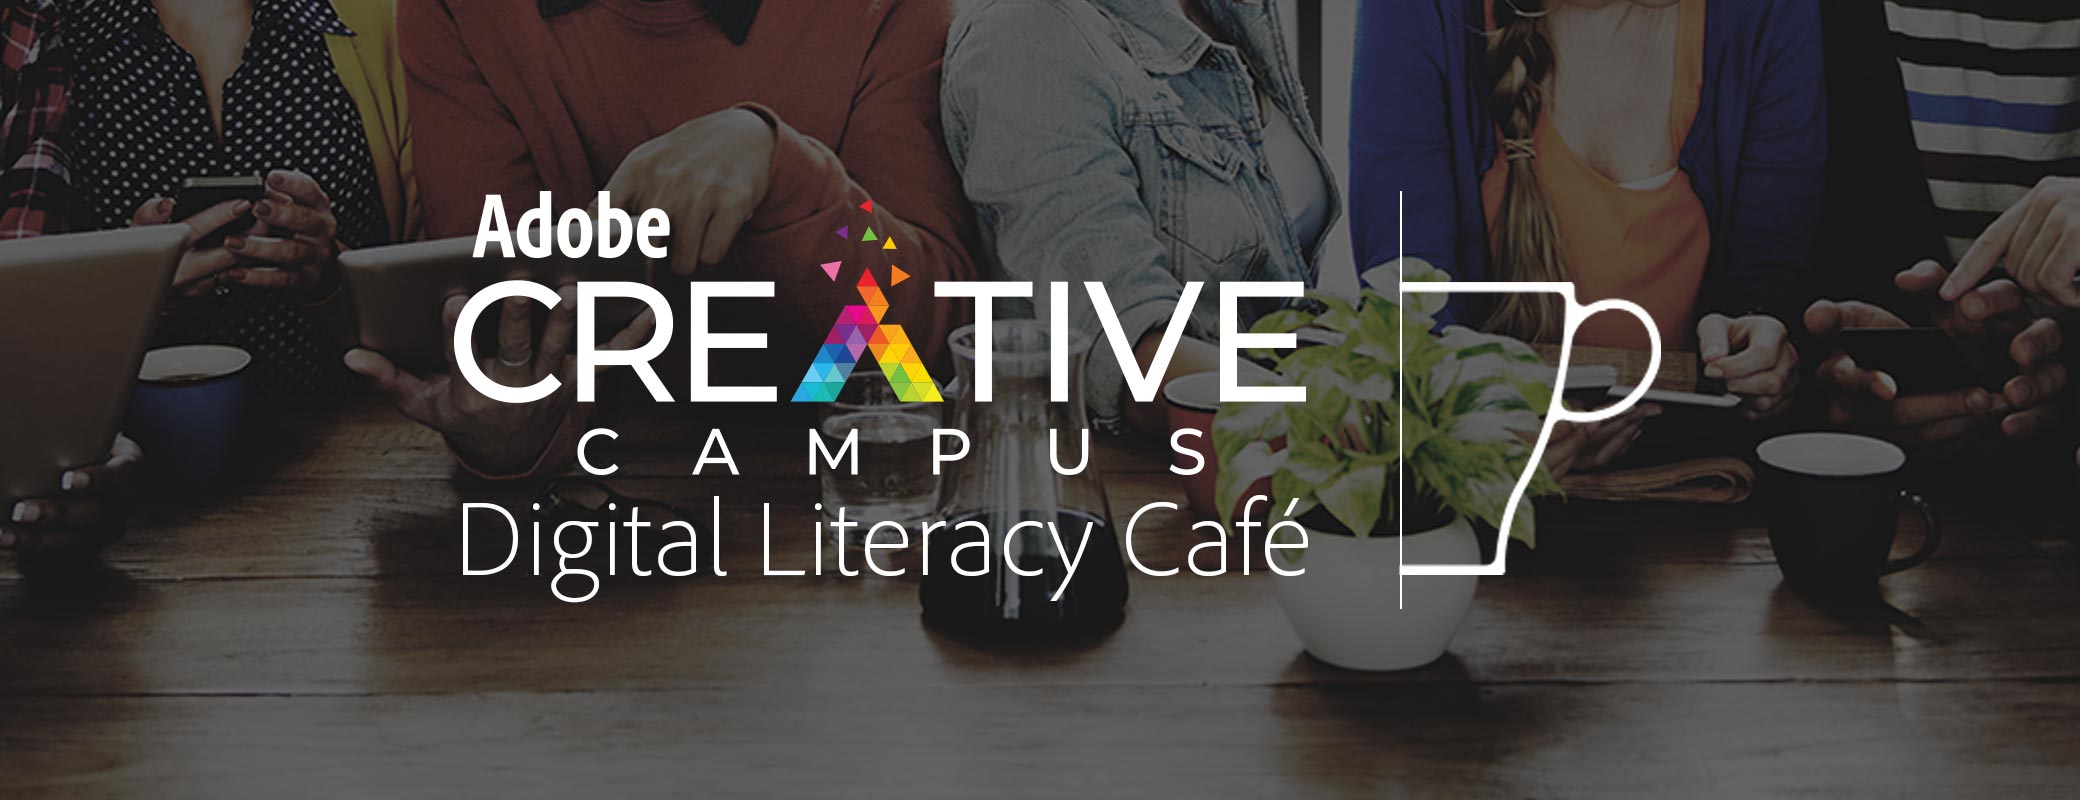 Adobe Creative Campus: Digital Literacy Café